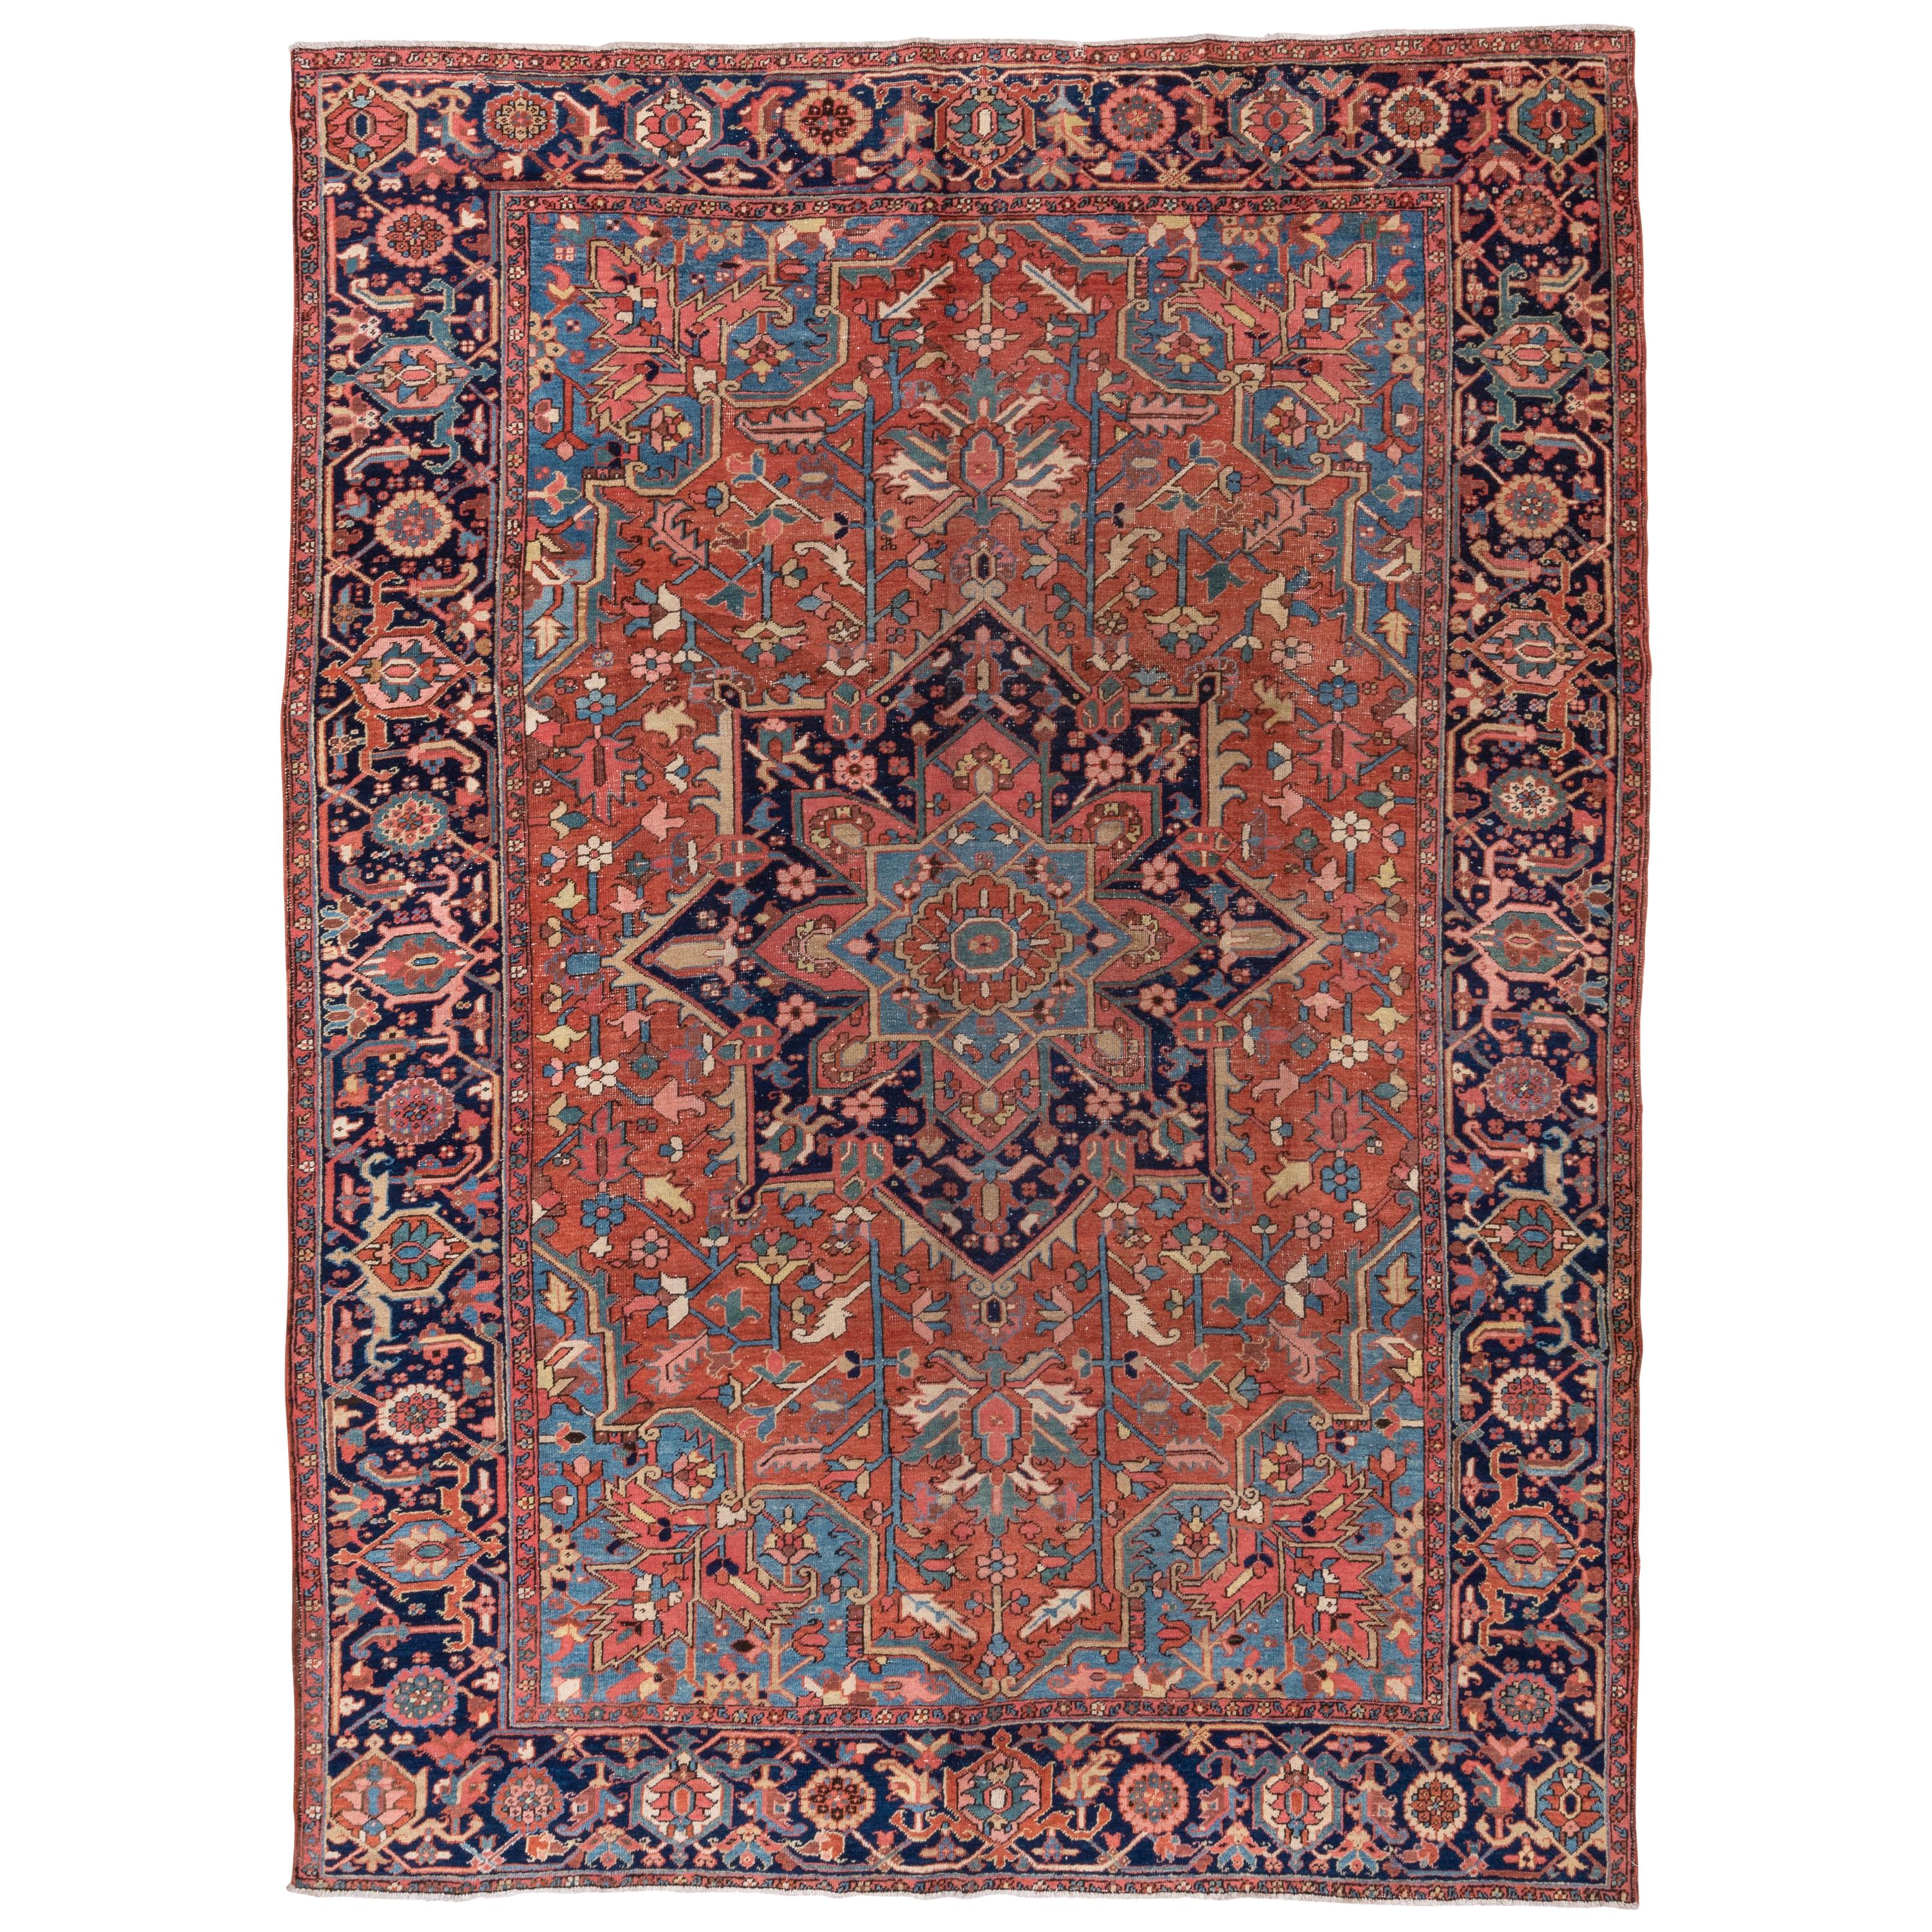 Antique Heriz Carpet, Soft Palette, circa 1920s